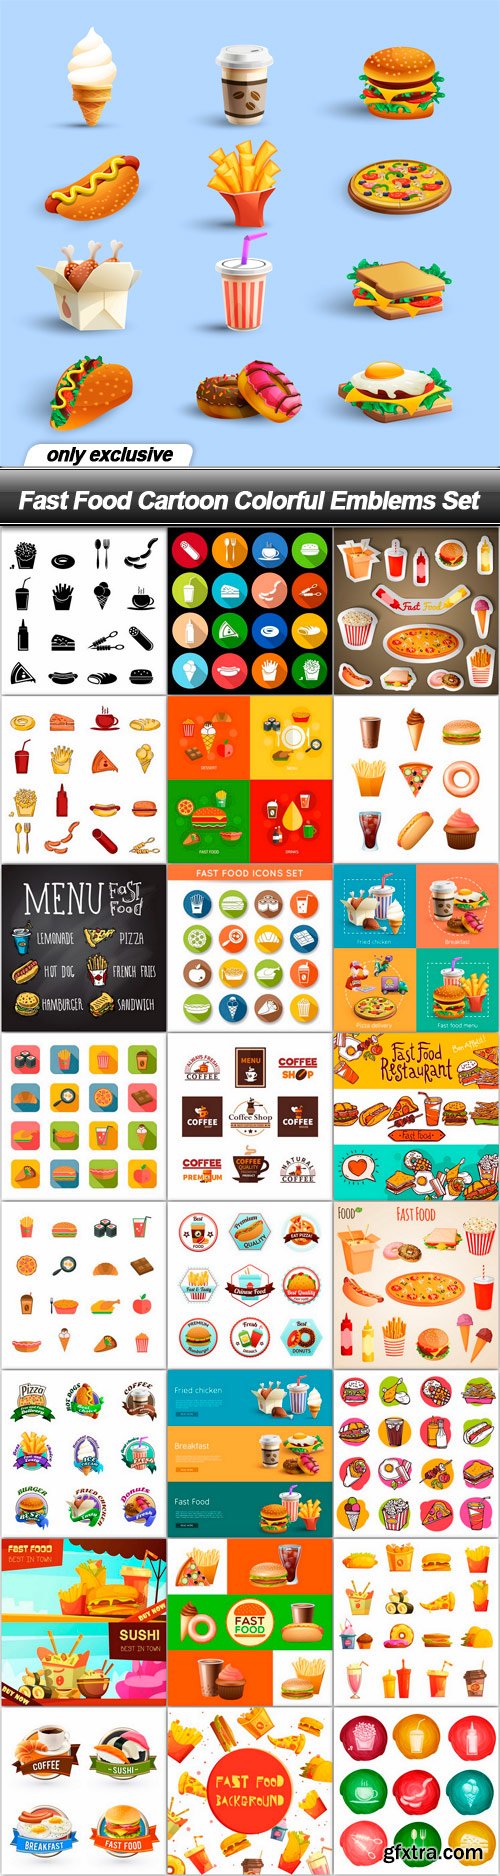 Fast Food Cartoon Colorful Emblems Set - 25 EPS